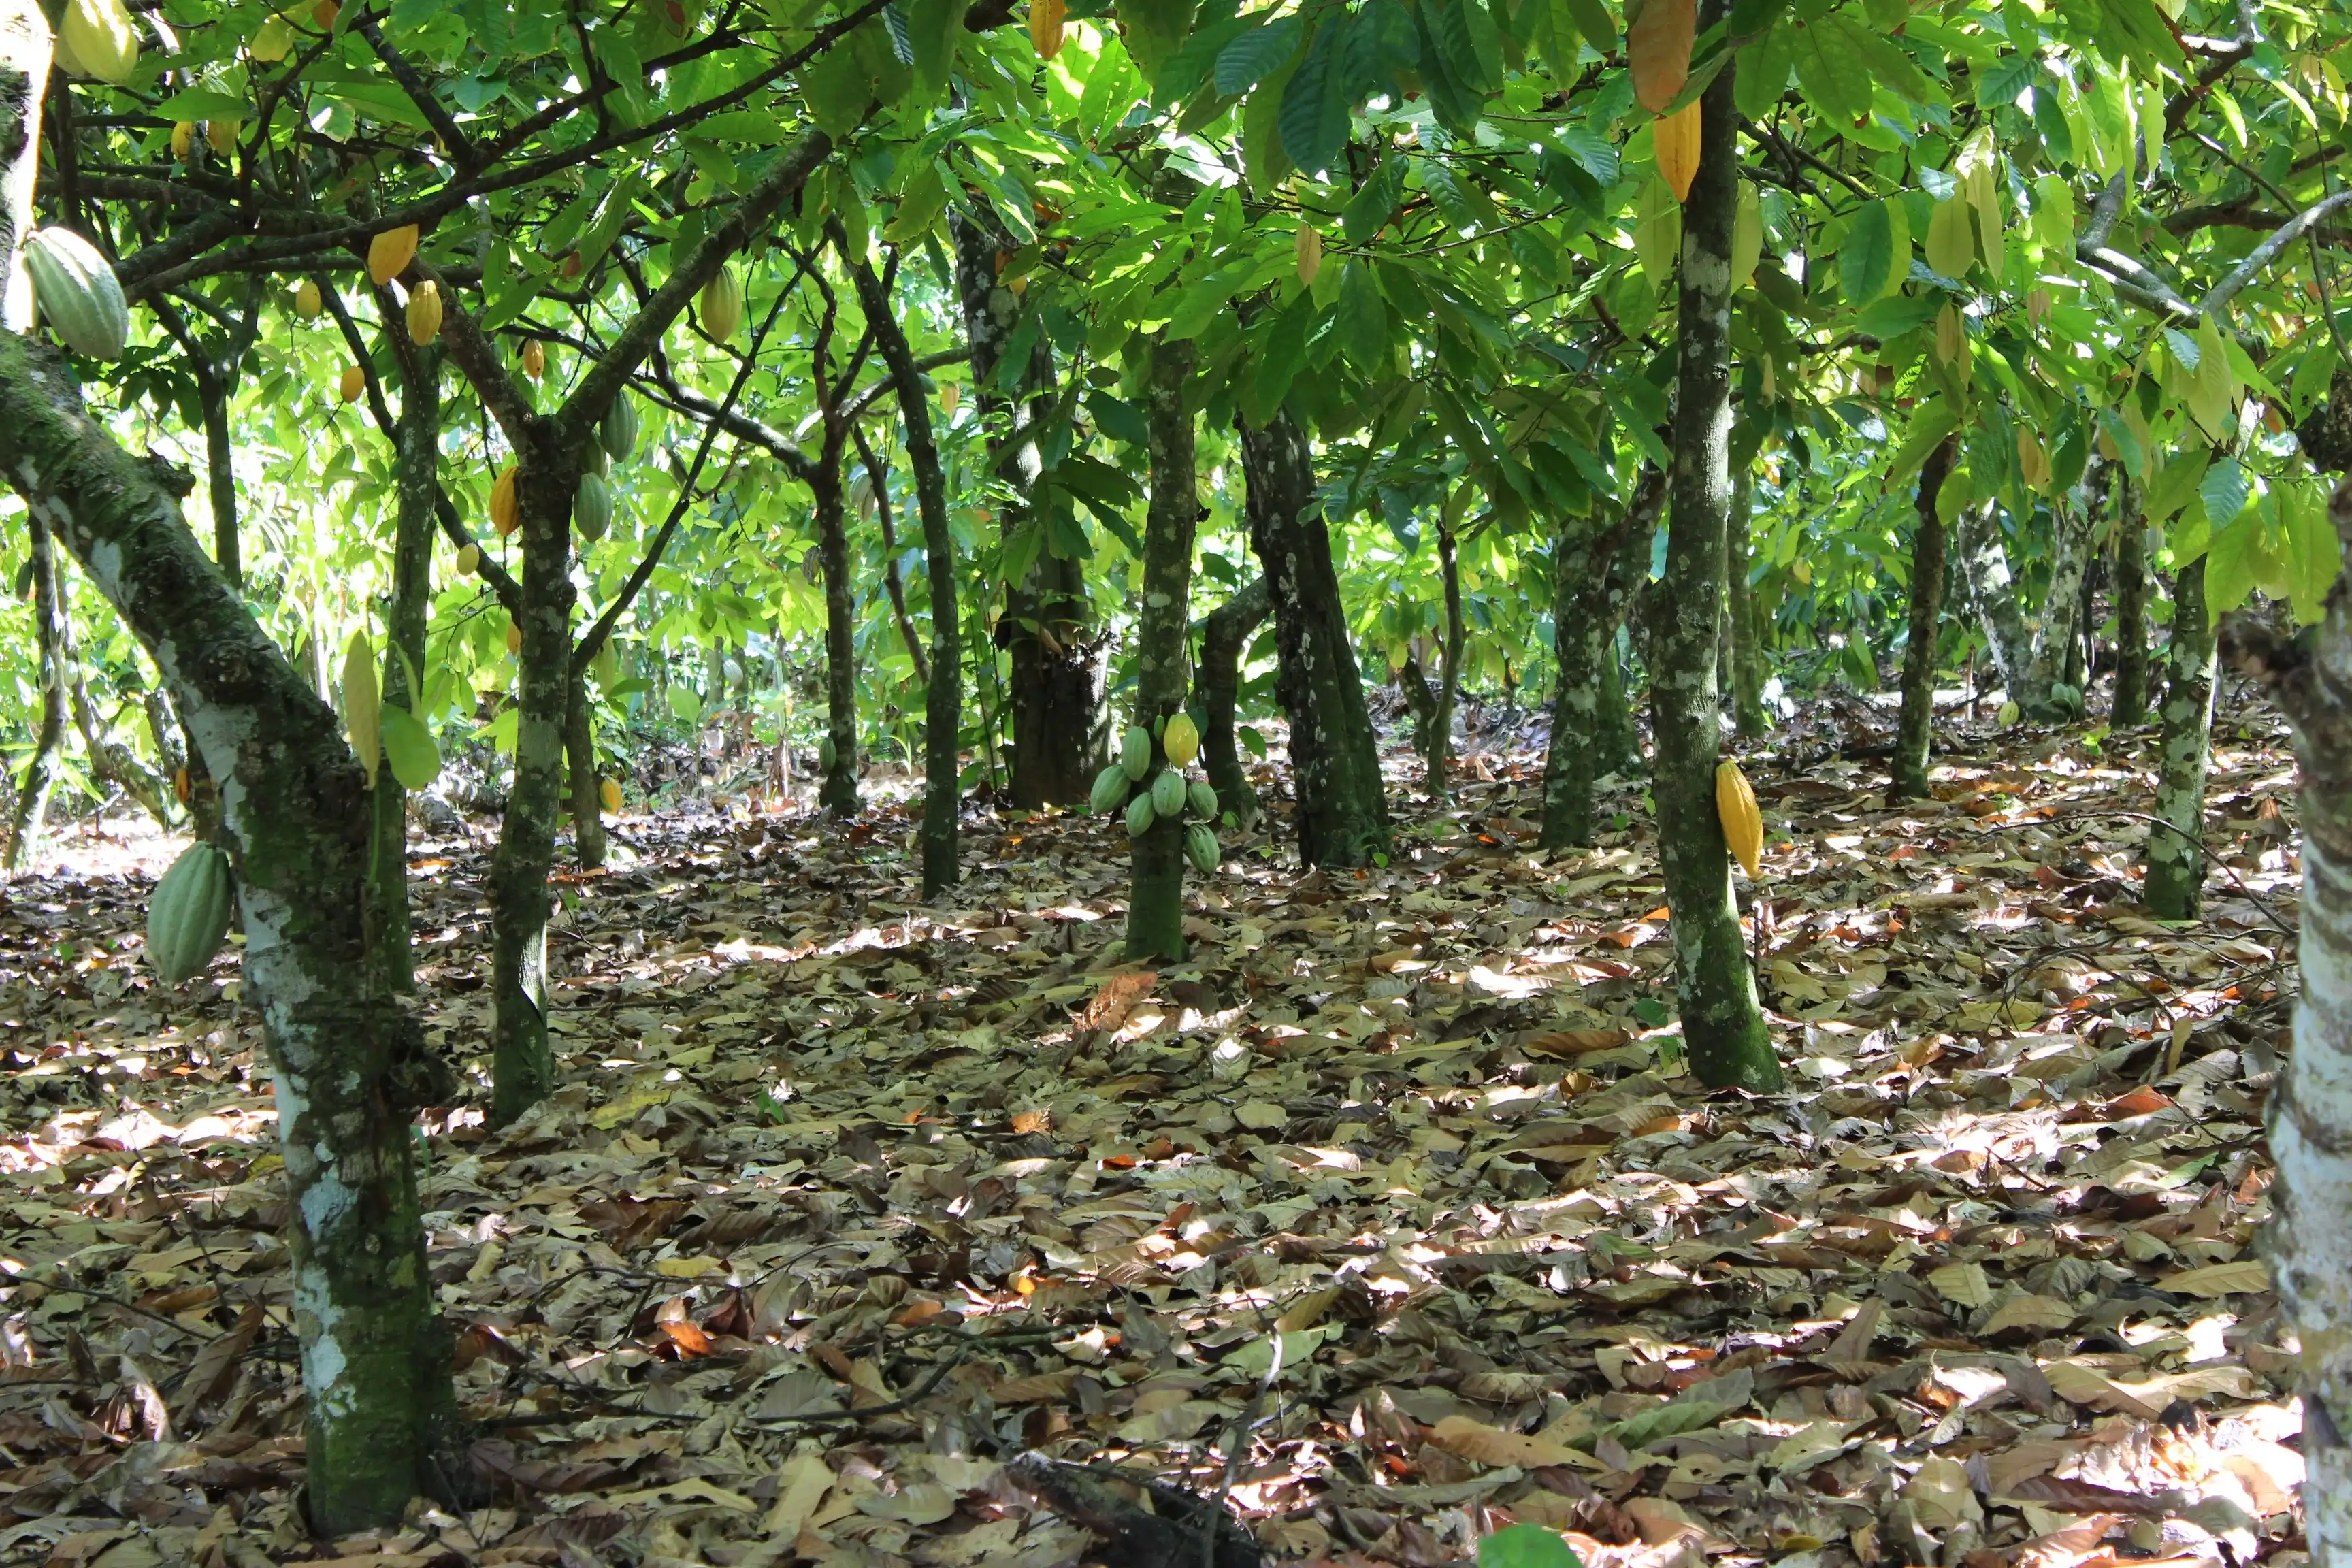 Cocoa trees in organic farming reserve from Hato Mayor, Dominican Republic